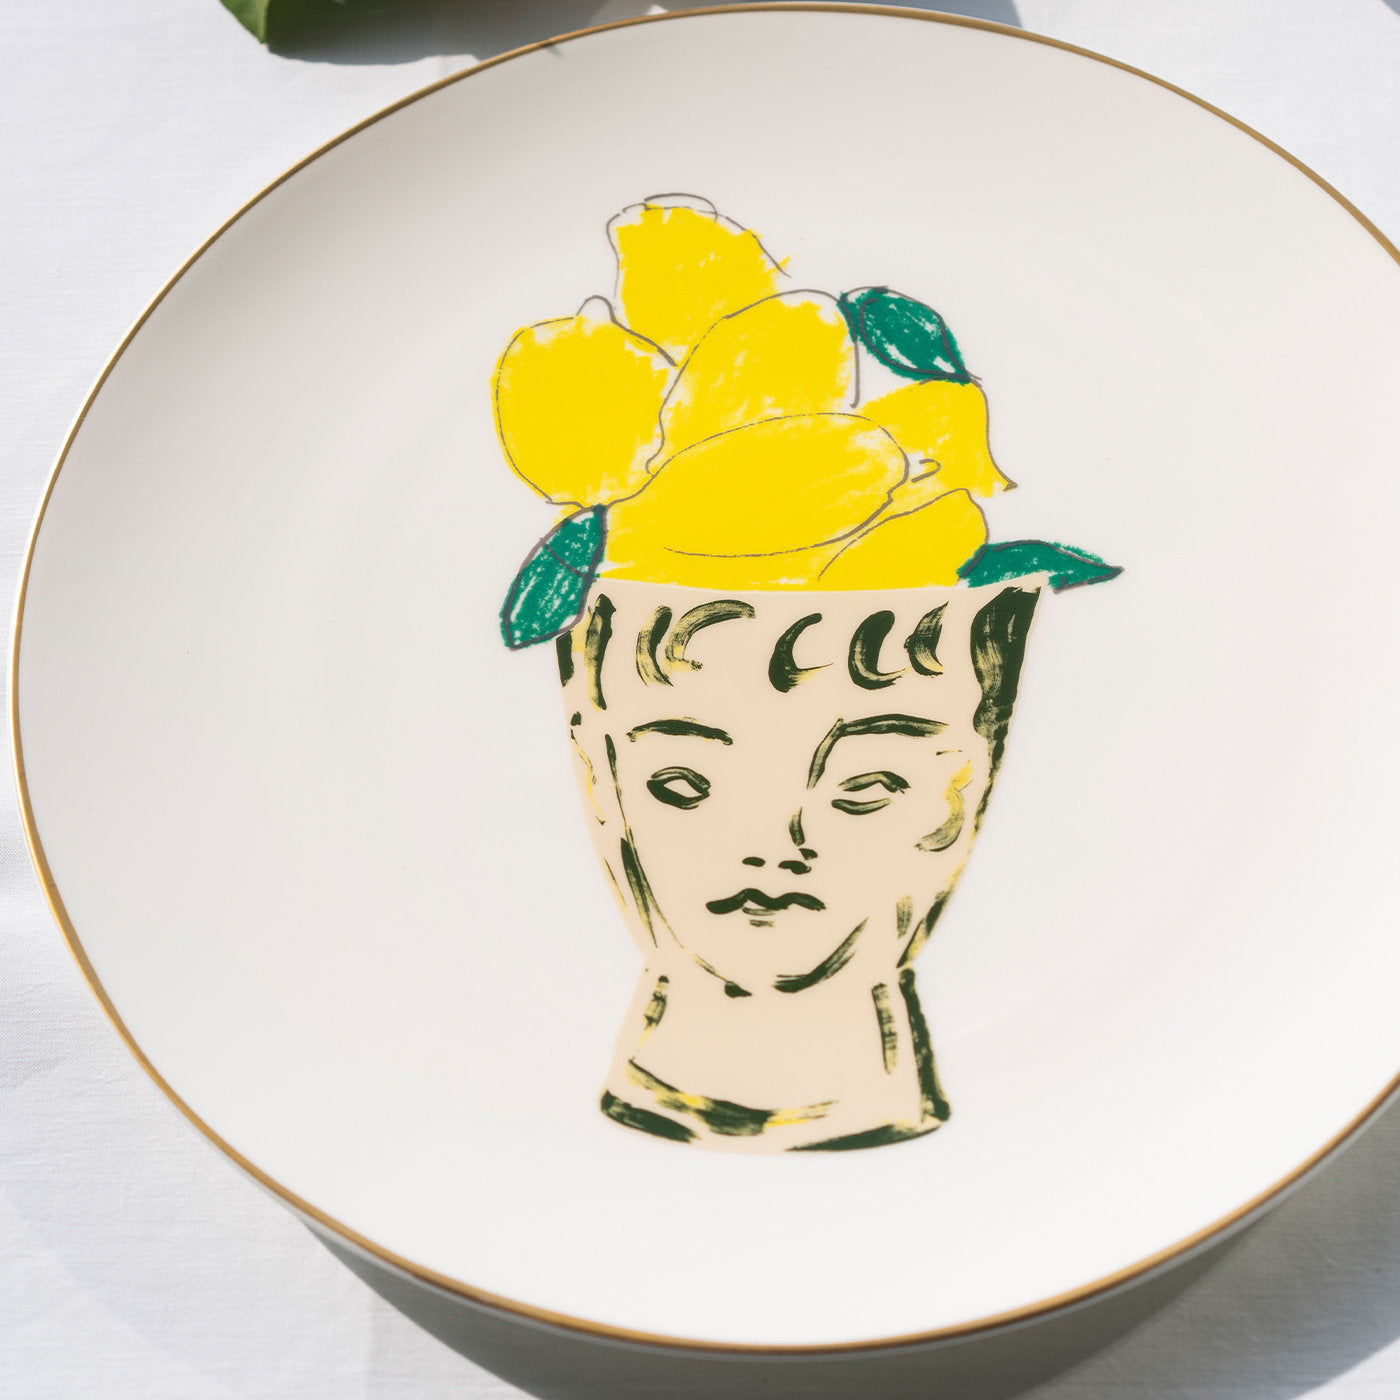 Lemon Vase Charger Plate by Luke Edward Hall - Alternative view 1